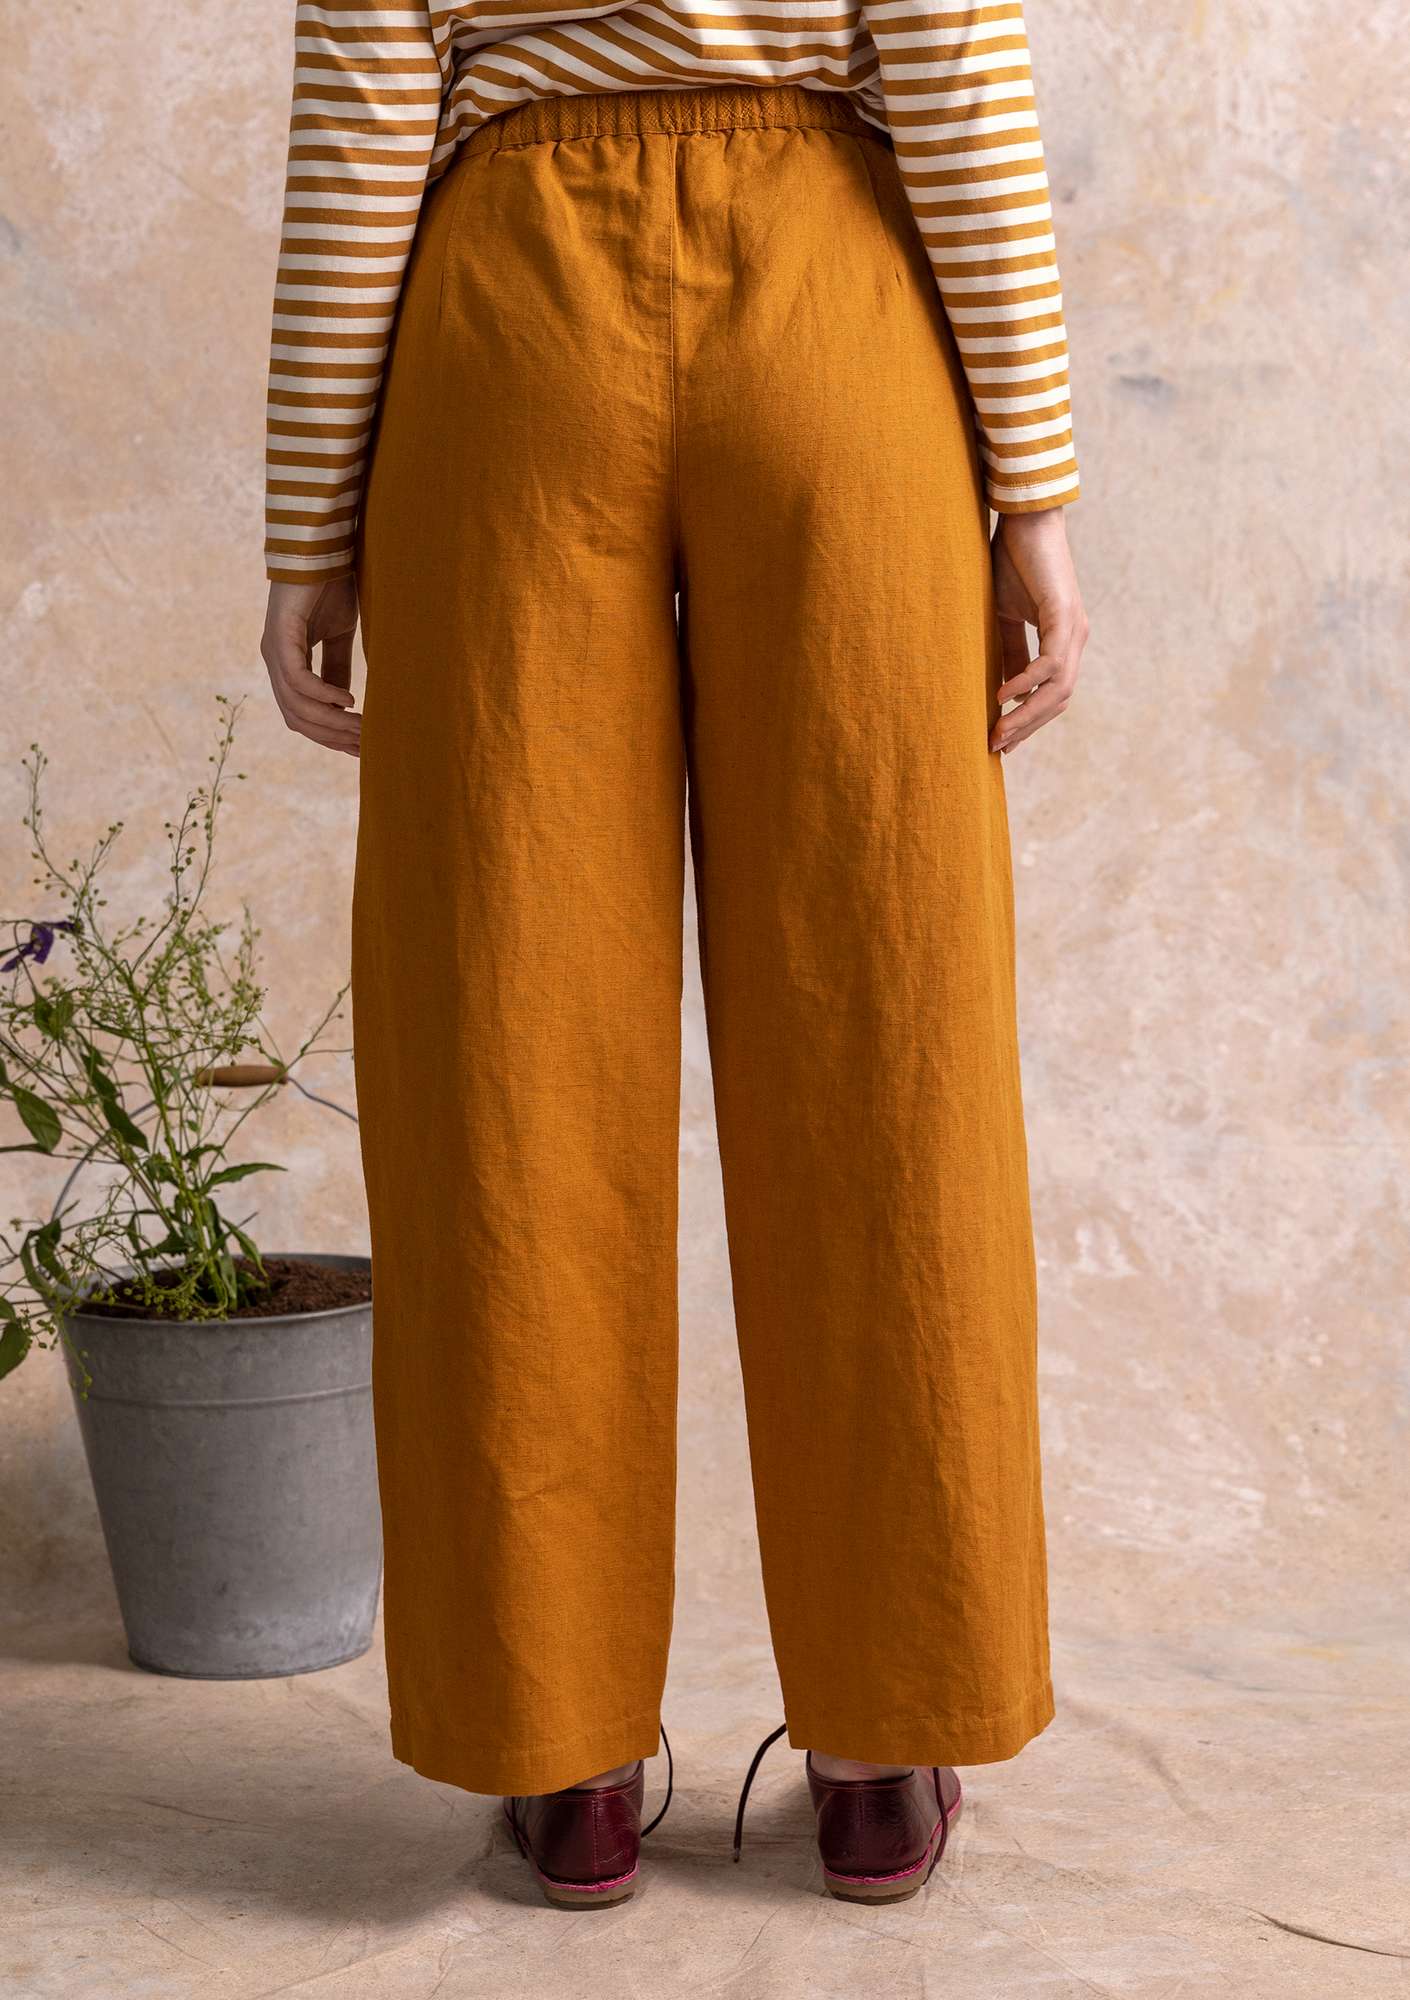 Trousers in a woven cotton/linen blend mustard